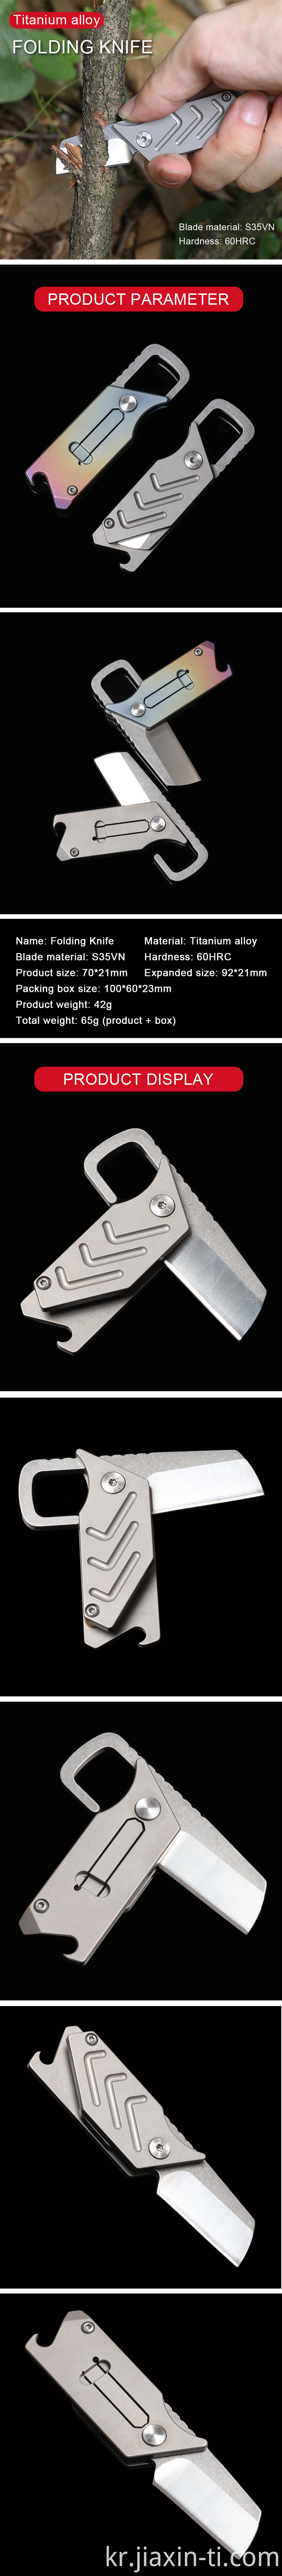 titanium pocket knife